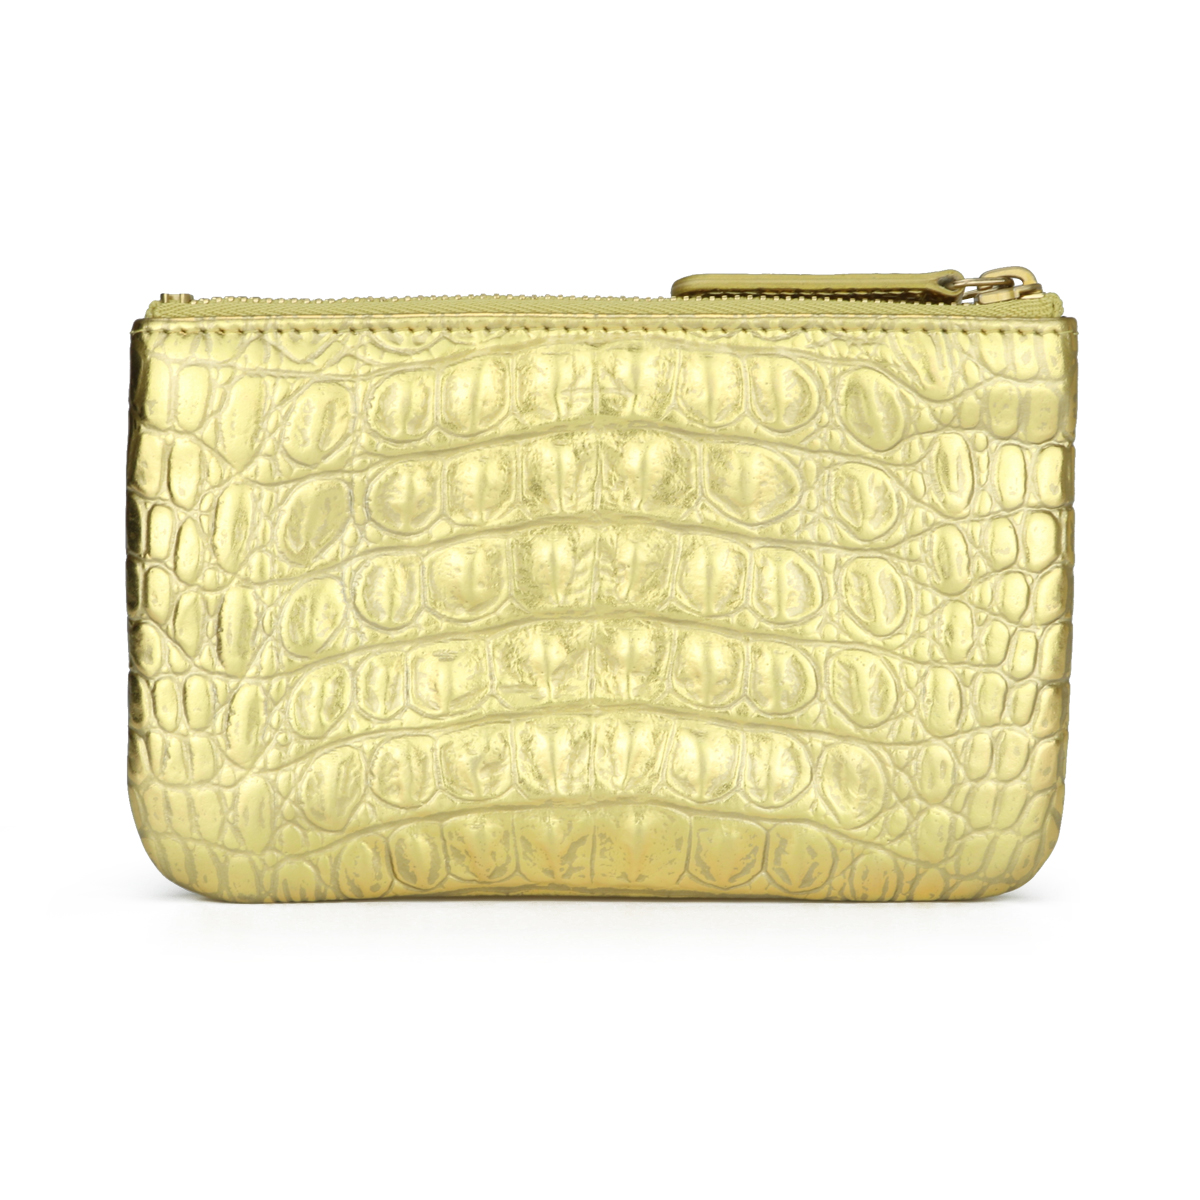 Chanel Metallic Gold Crocodile Embossed Medium Gabrielle Hobo Aged Gold and Ruthenium Hardware, 2019 (Like New), Womens Handbag